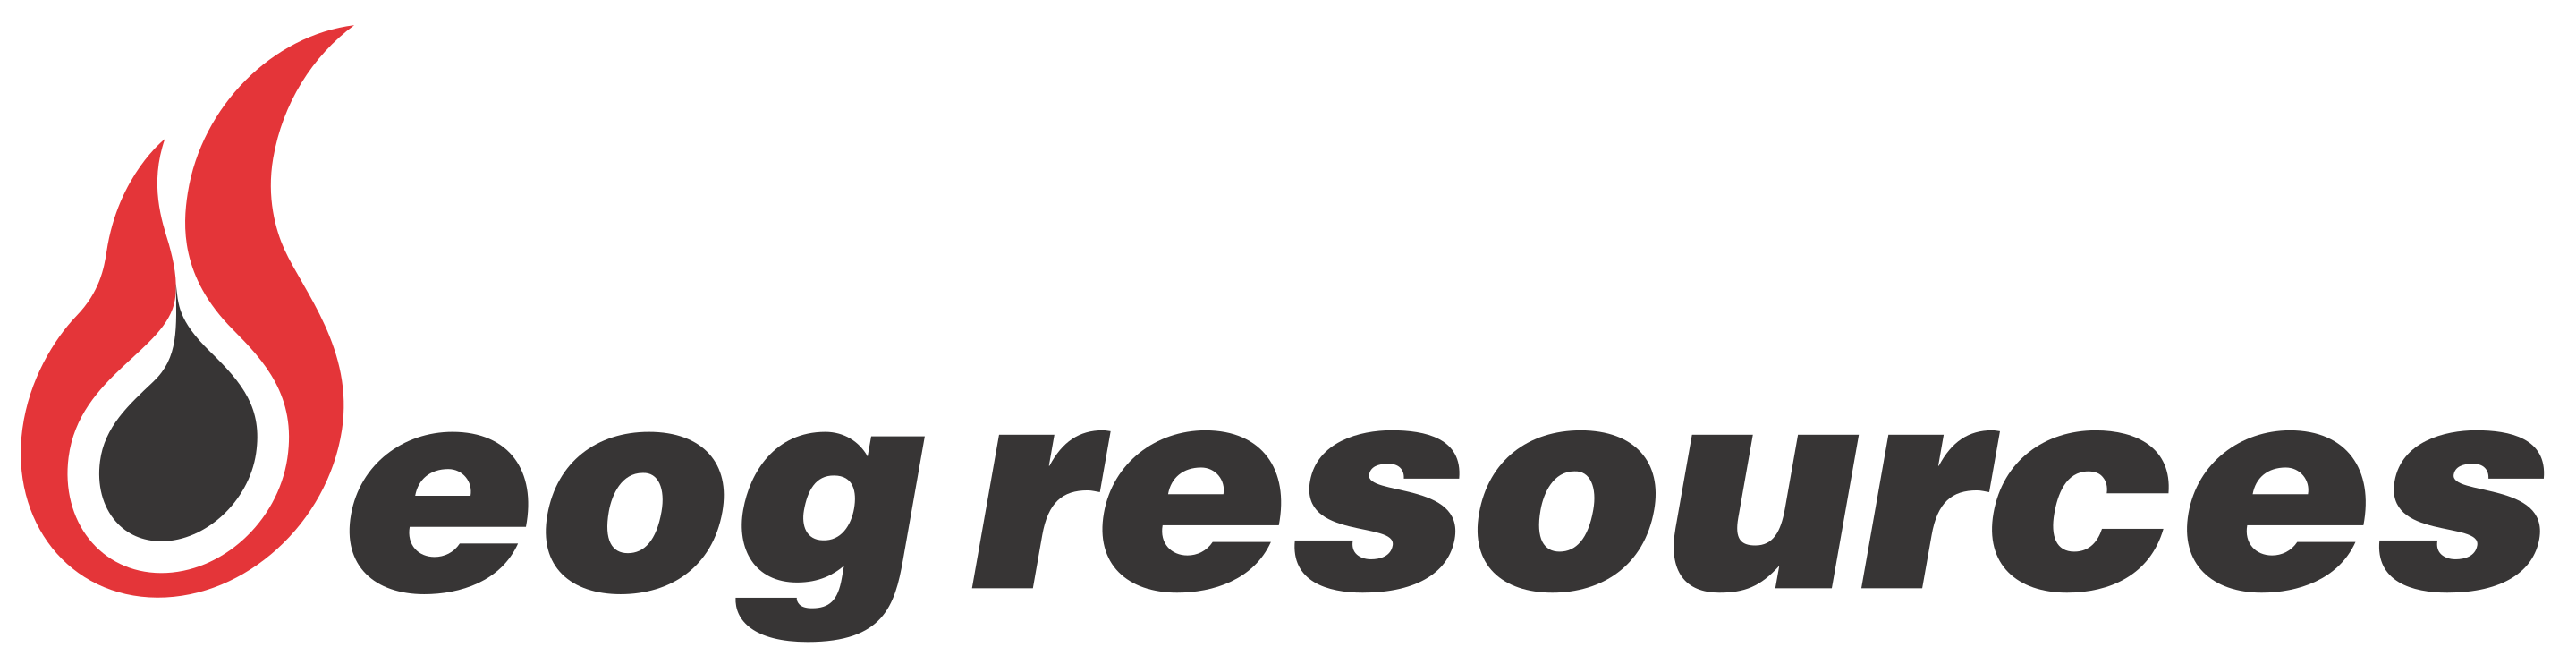 2880px-EOG Resources logo.svg